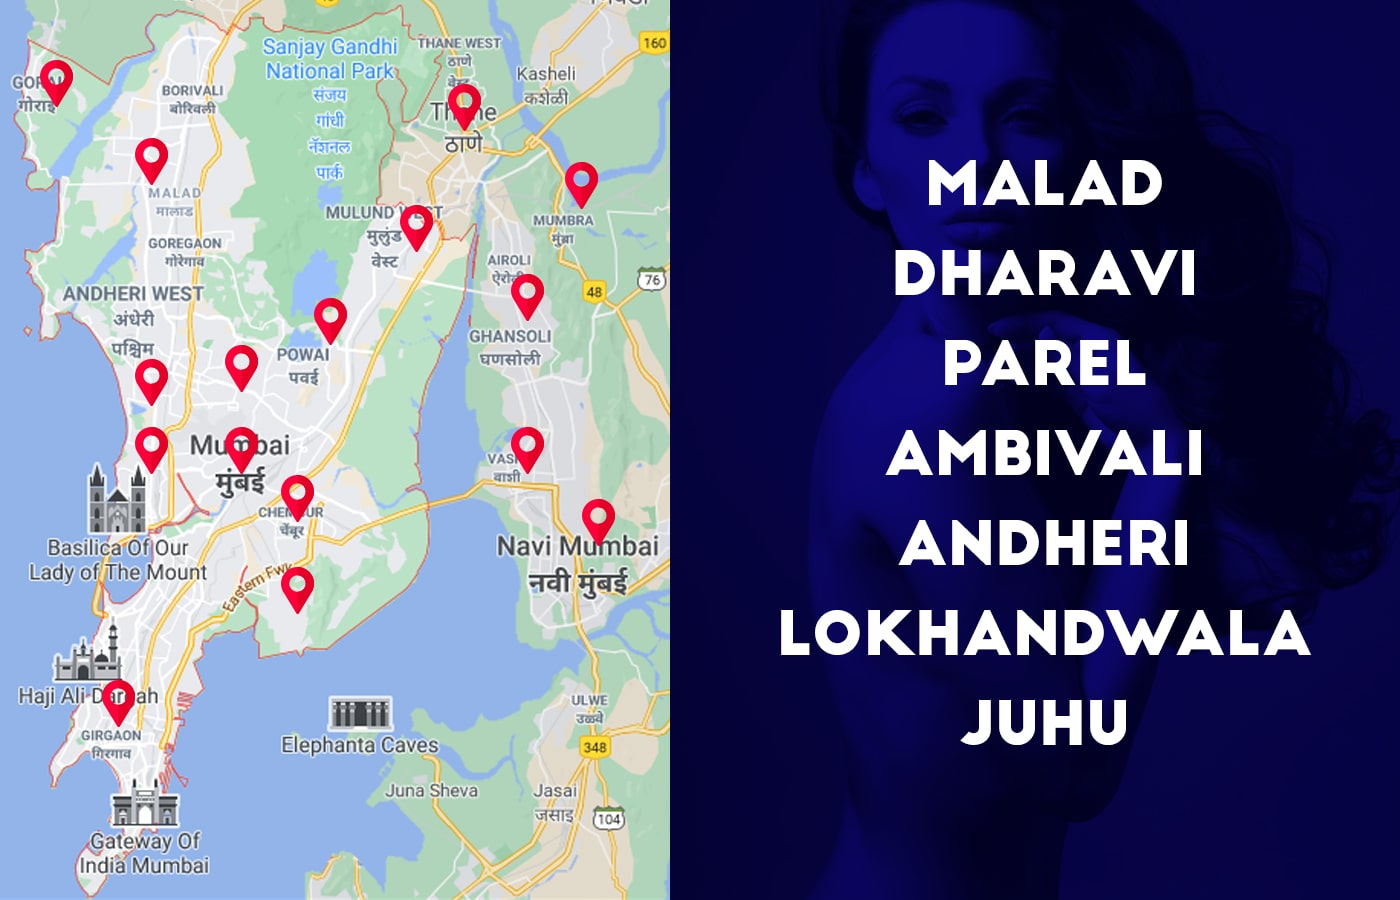 Mumbai locations where we serve